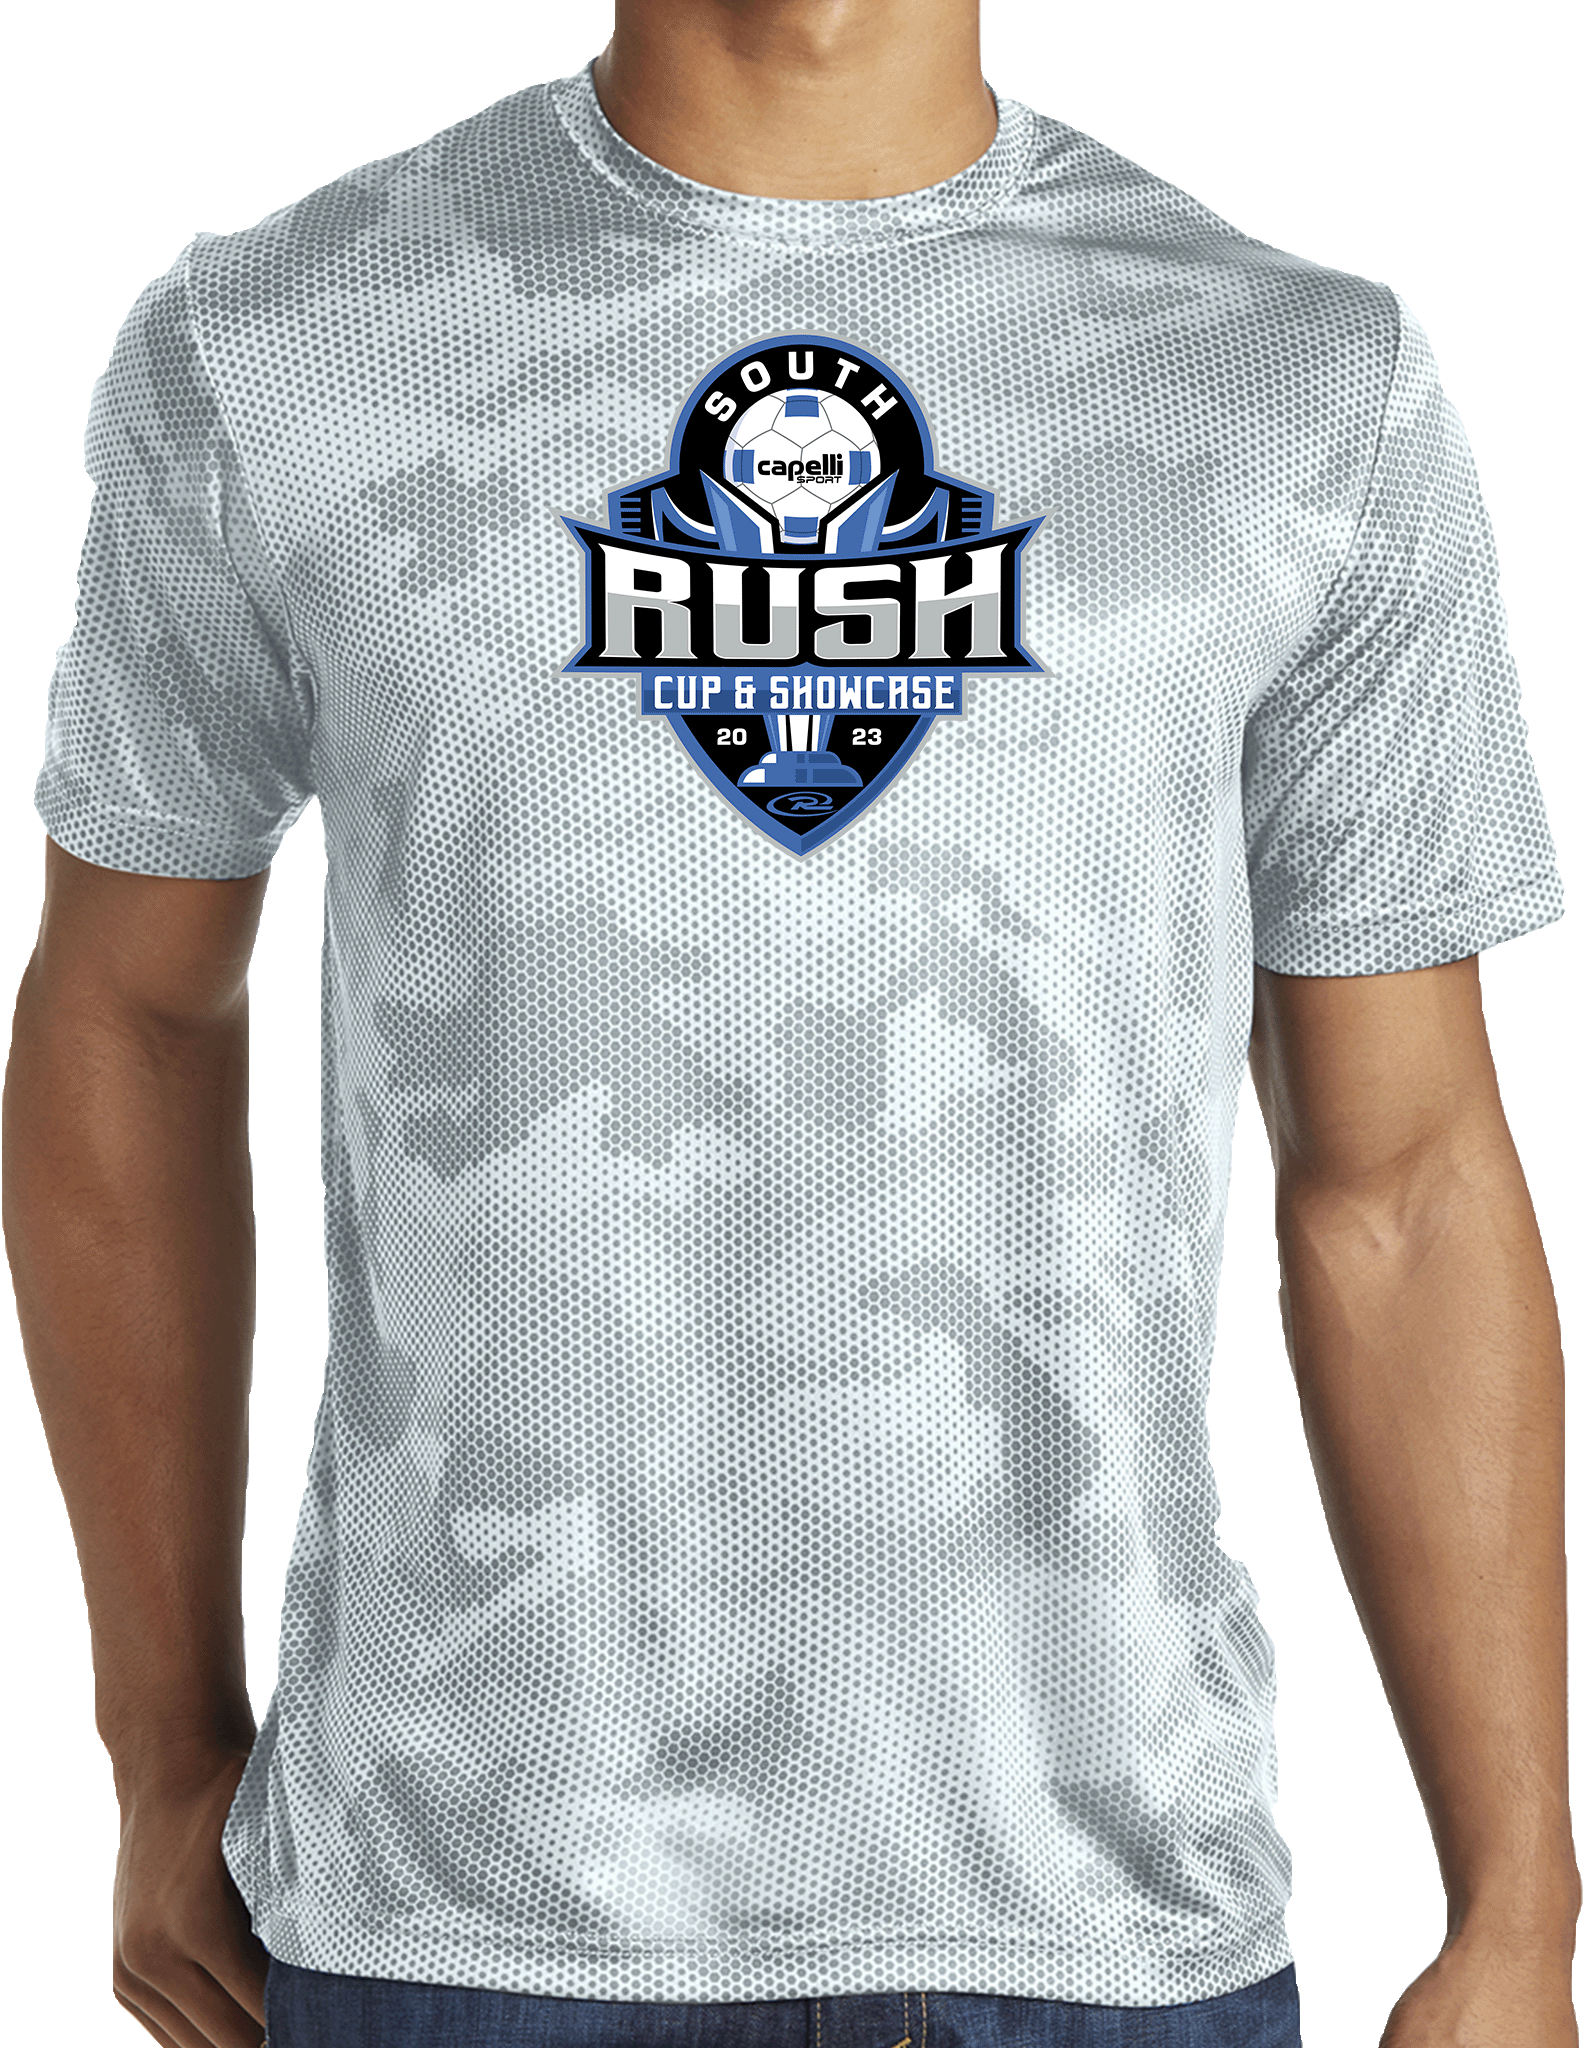 Performance Shirts - 2023 South Rush Cup & Showcase